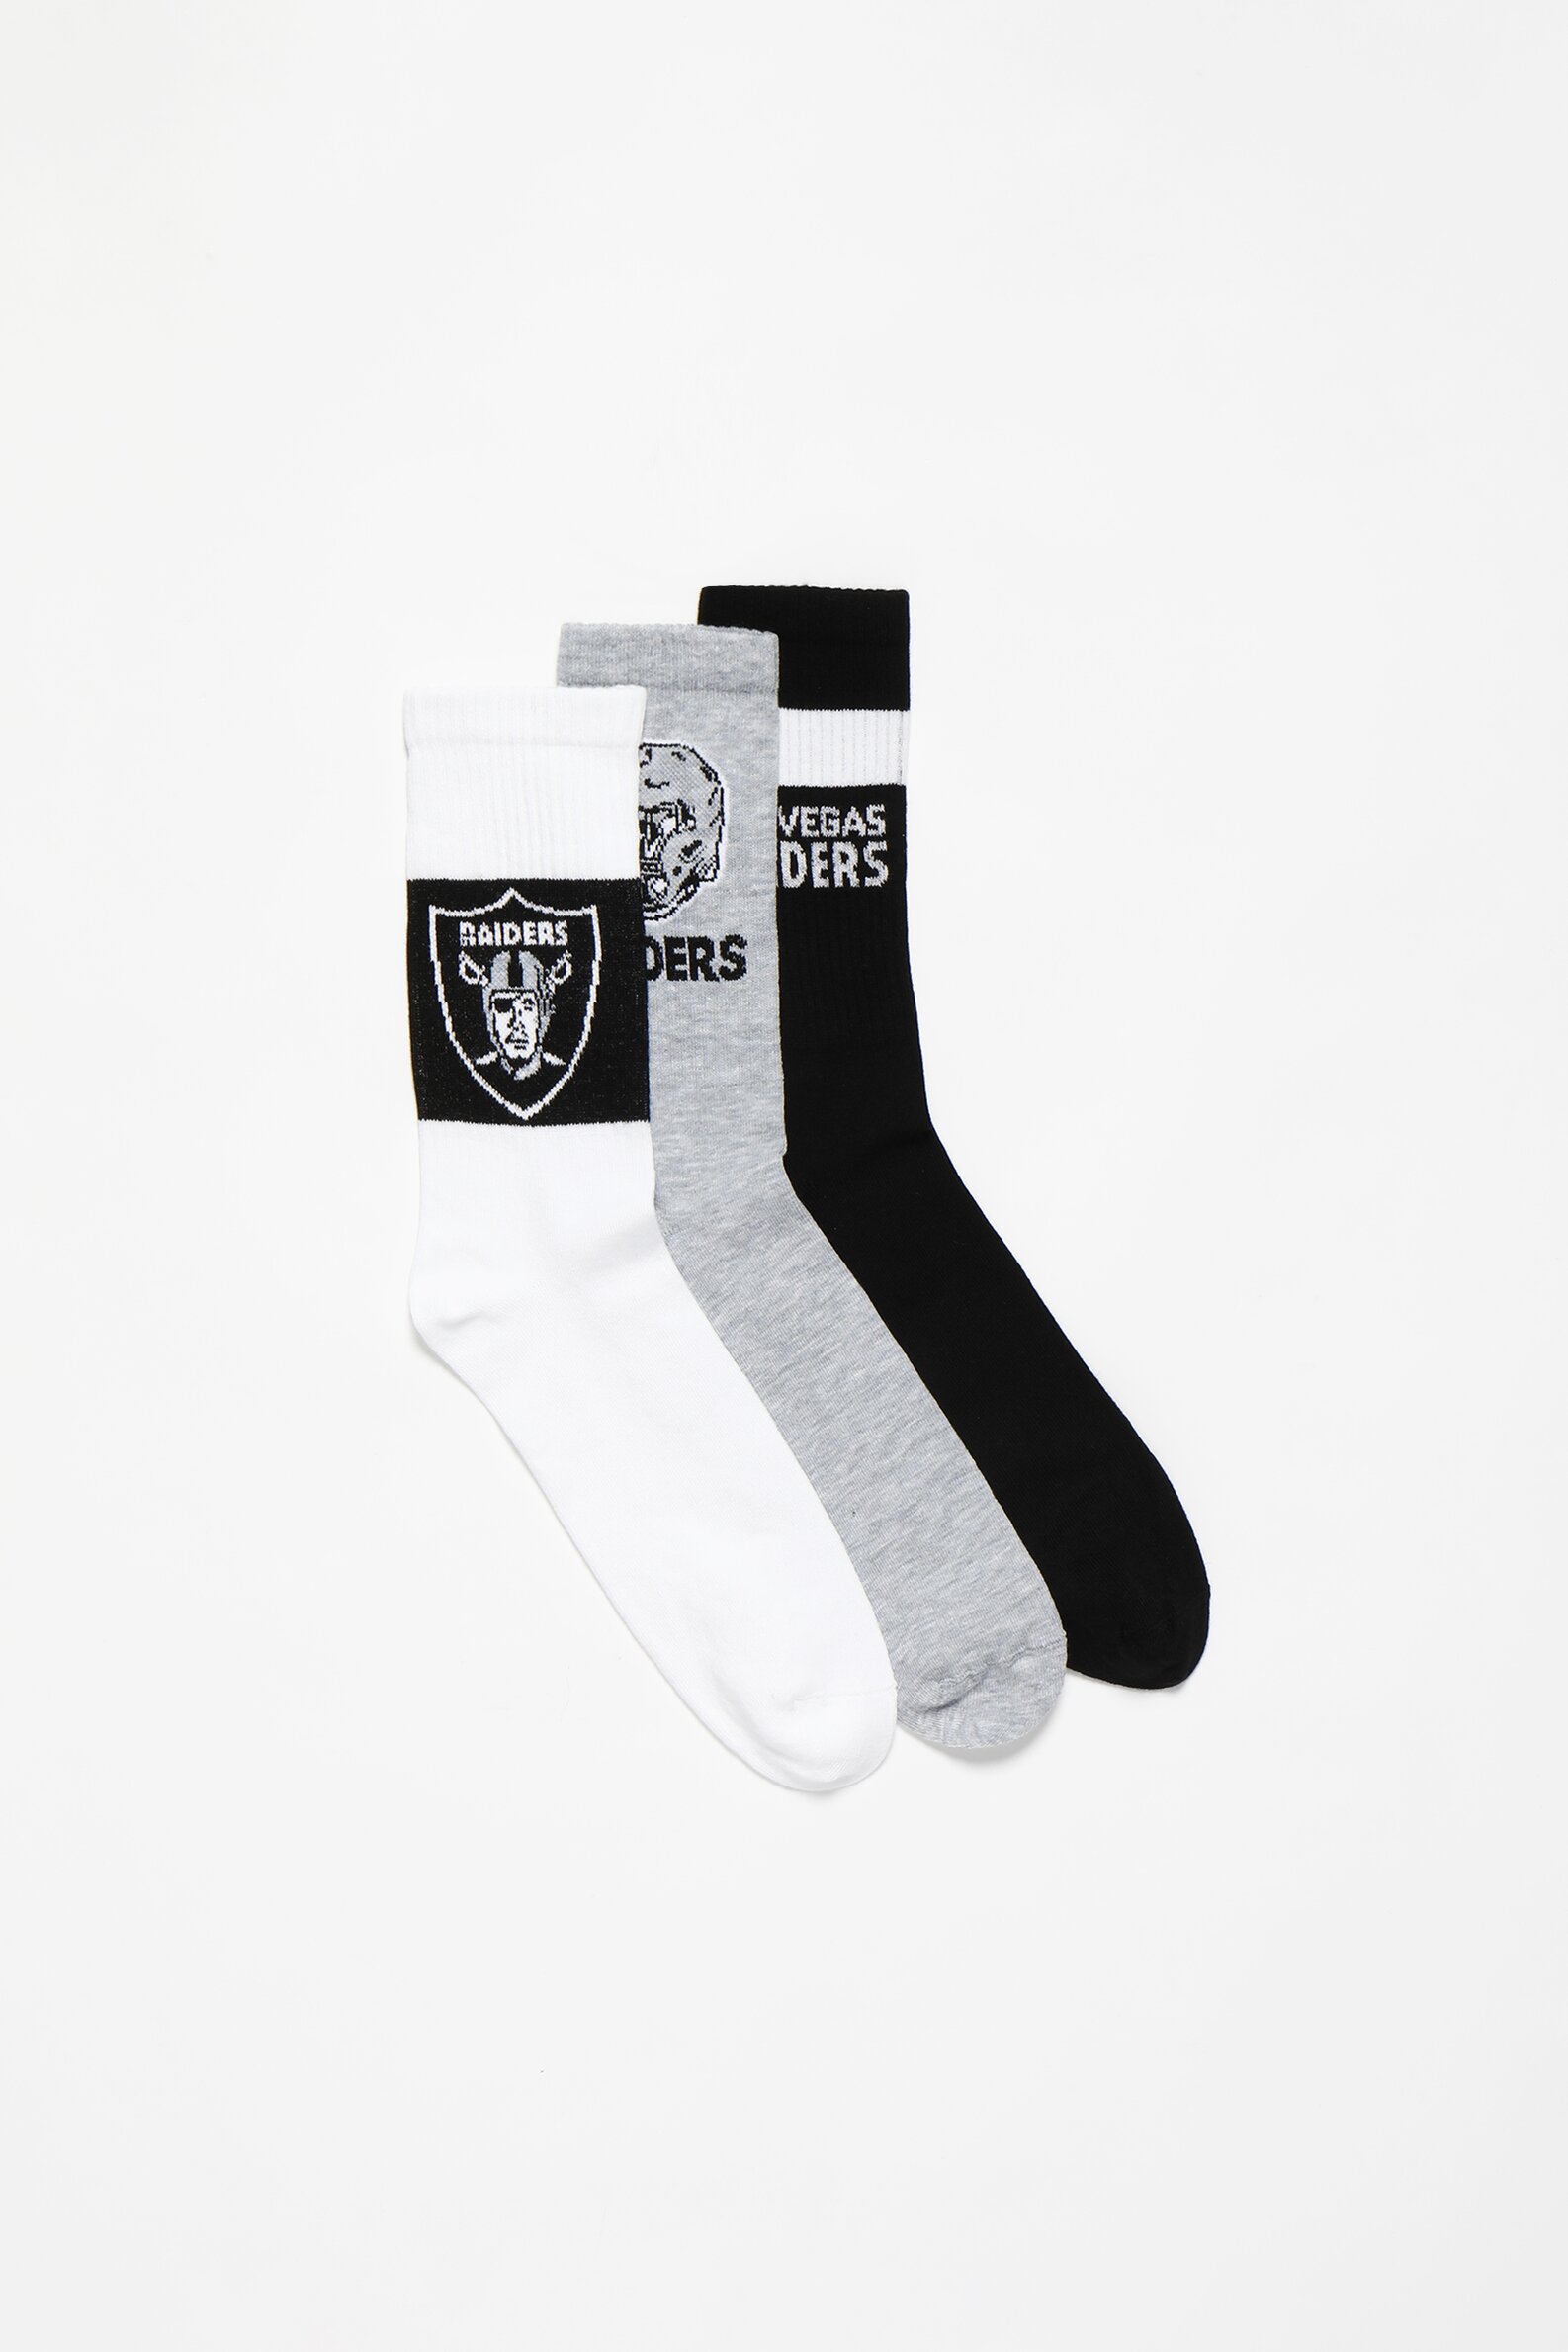 3-Pack of NFL Las Vegas Raiders socks - Long socks - Socks - CLOTHING - Man  